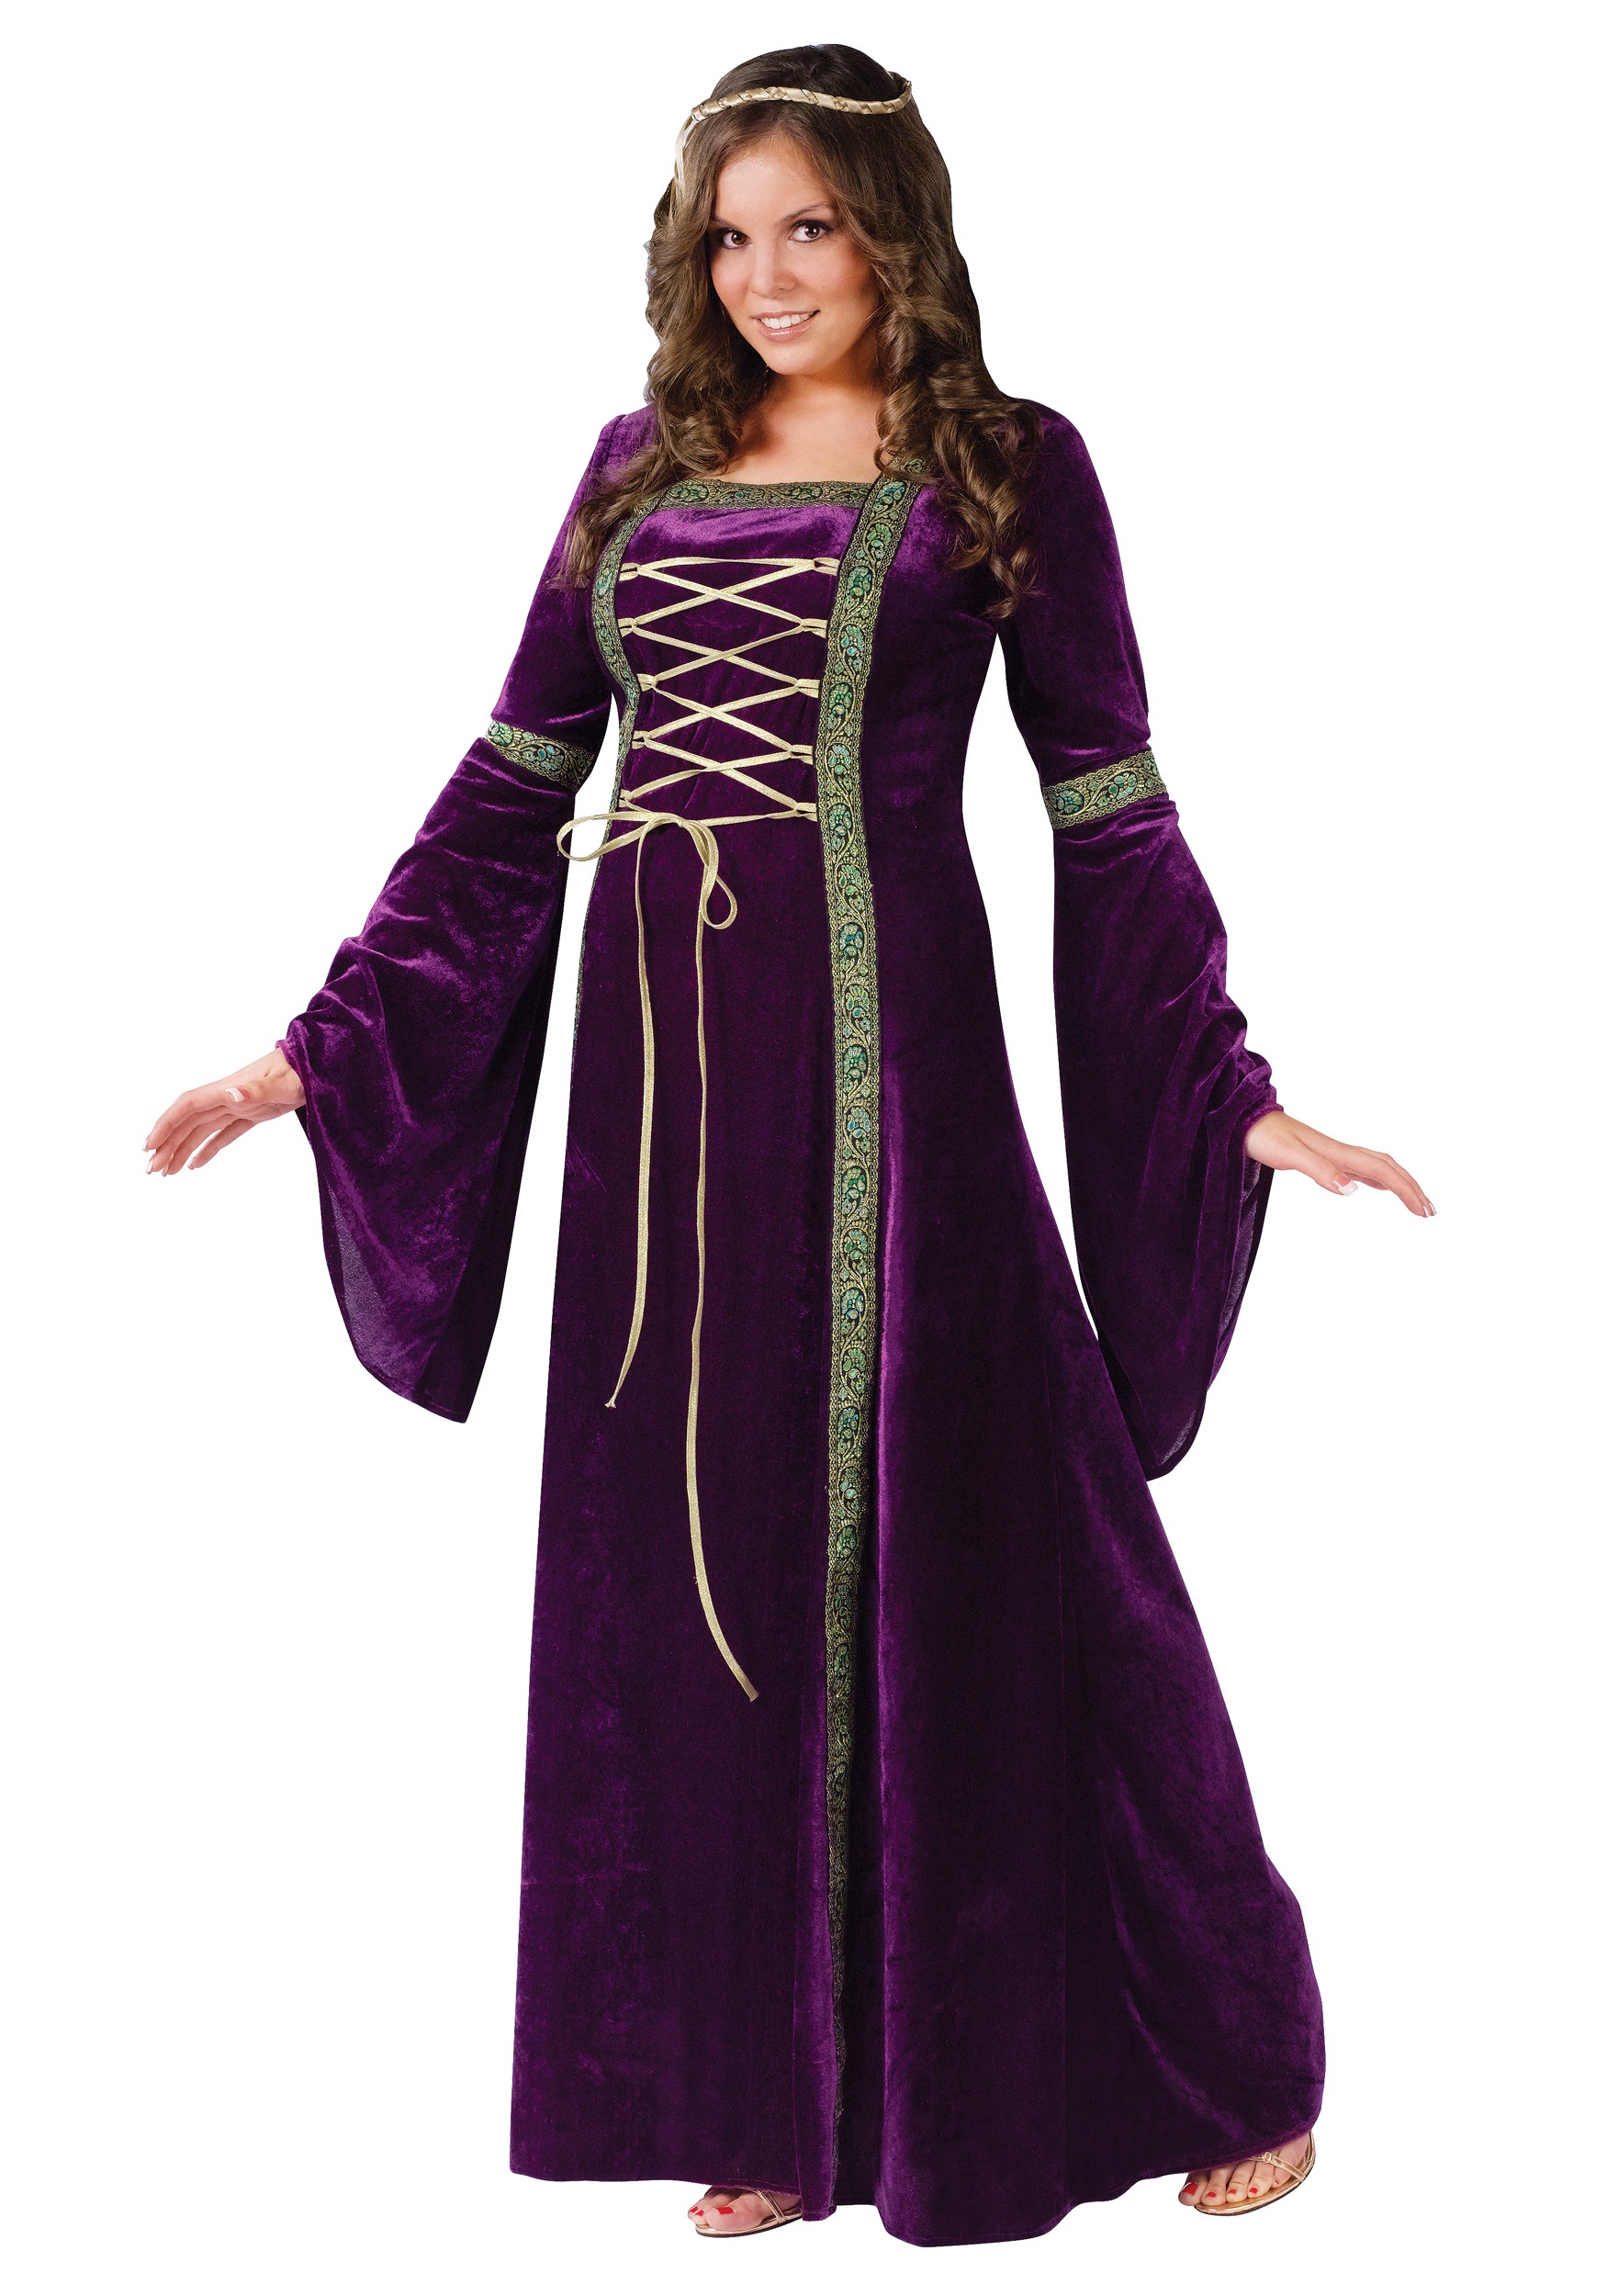 Plus Size Women's Renaissance Lady Fancy Dress Costume , Decade Fancy Dress Costumes